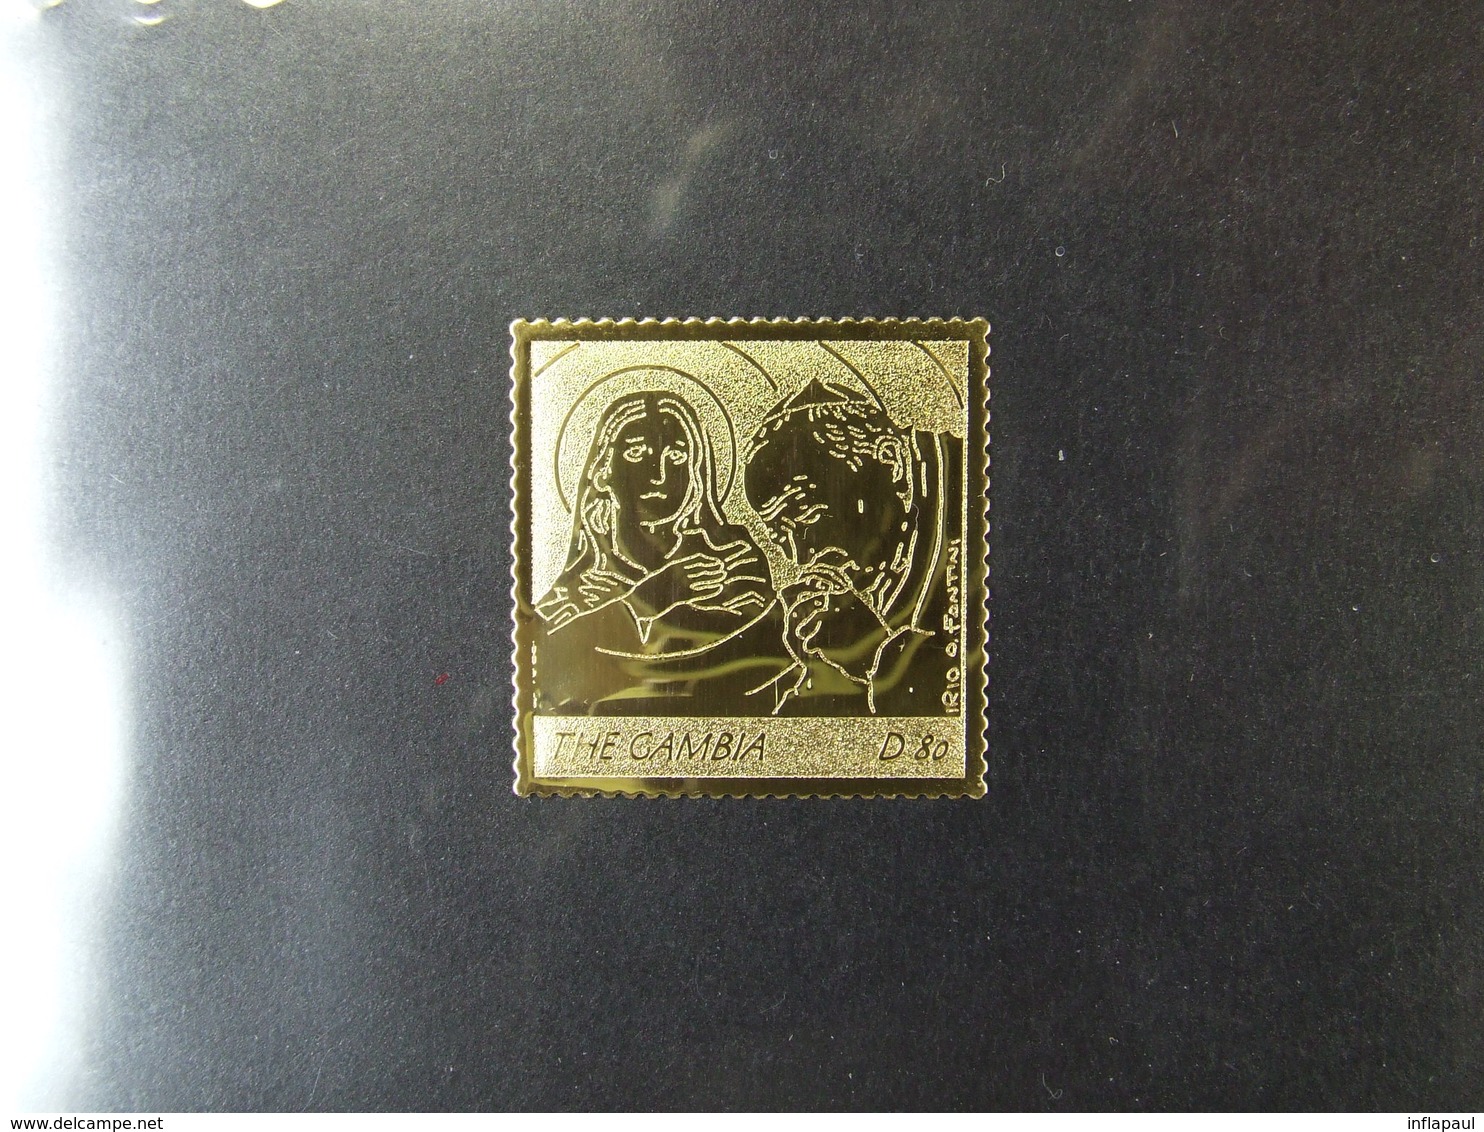 Gambia - 5548-74 Papst Silber und Goldbriefmarken komplett ** MNH Michelwert 180,00 € (6676)